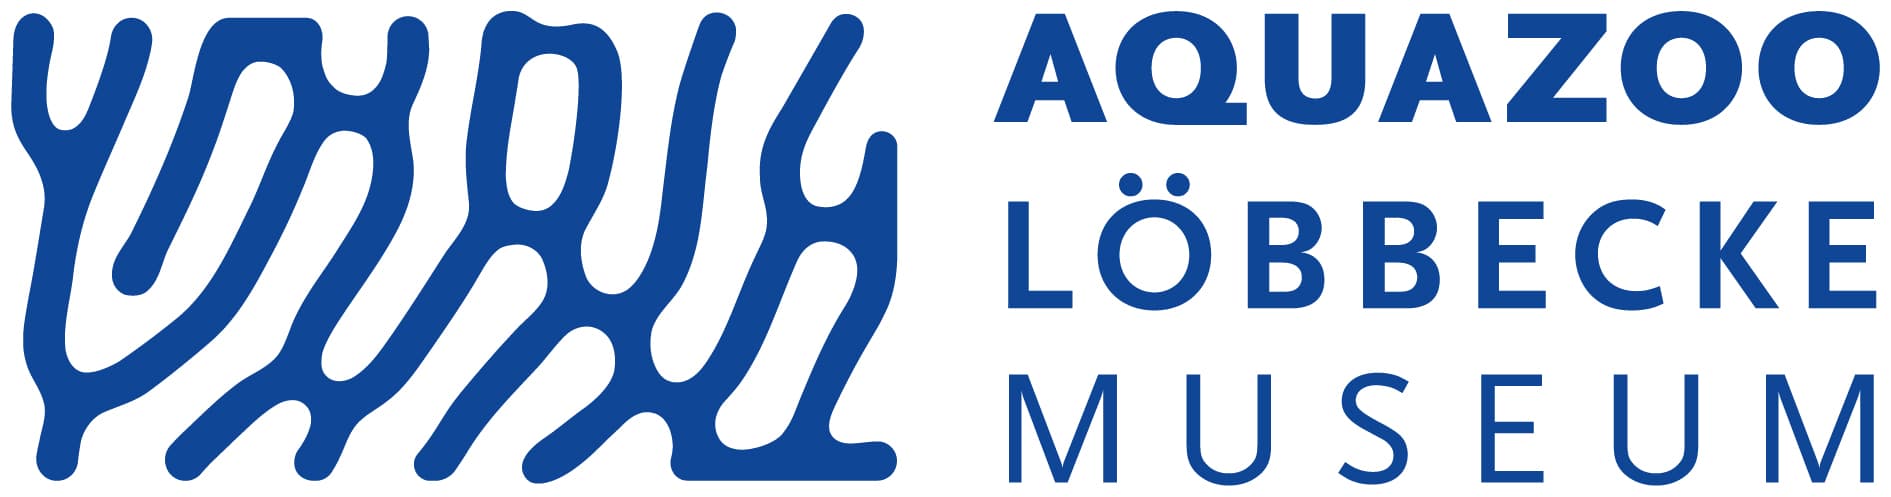 Aquazoo – Löbbecke Museum Logo